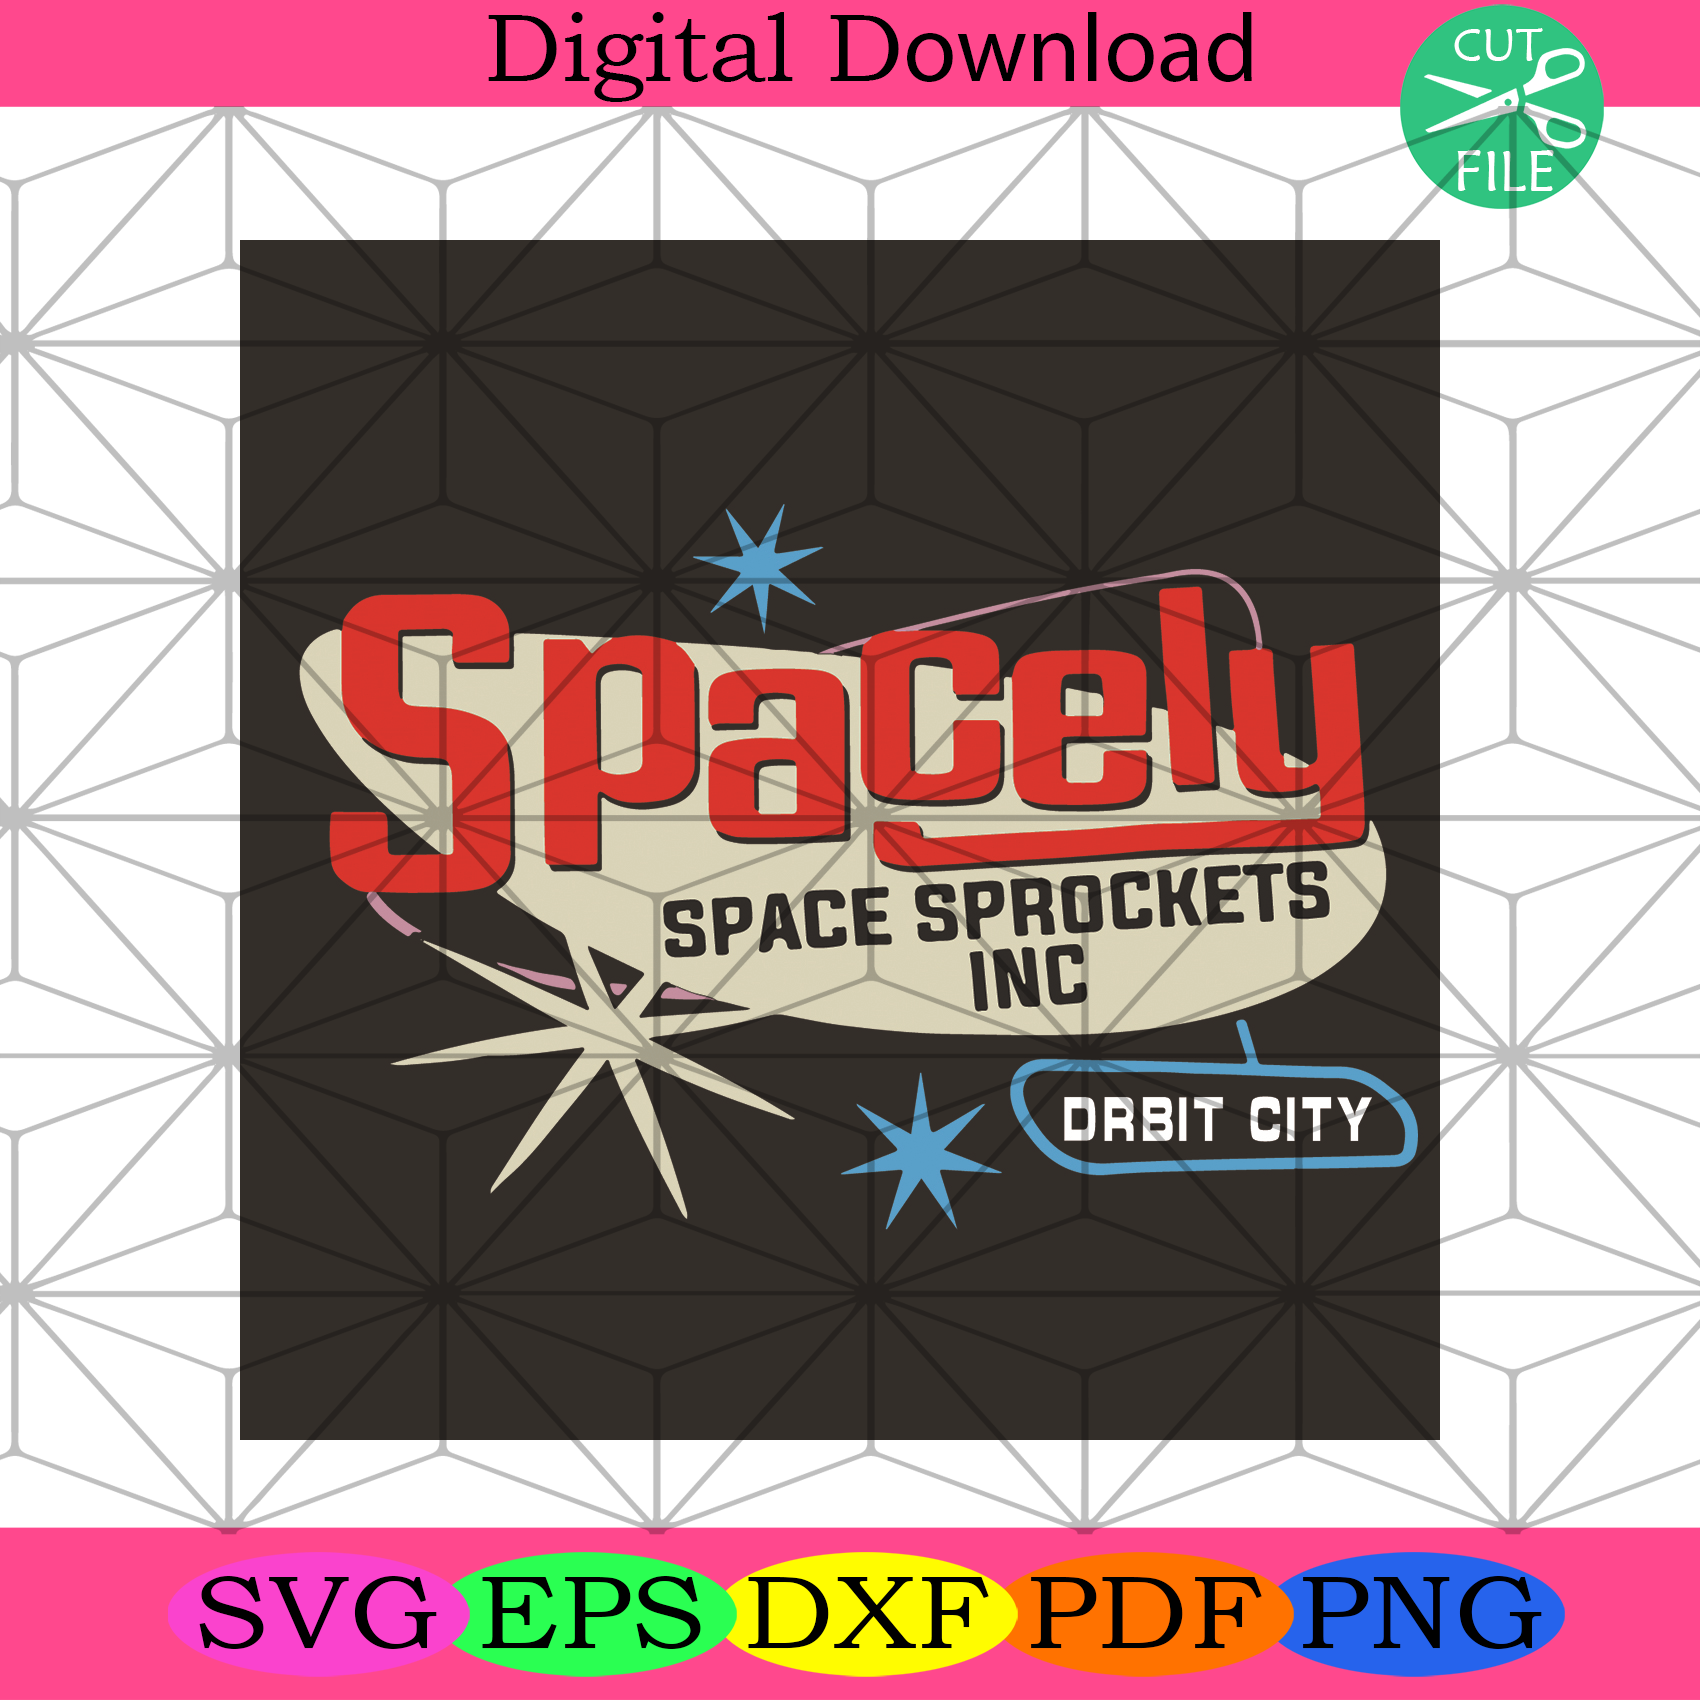 Spacely Space Sprockets Inc Drbit City Svg Trending Svg, Spacely Svg